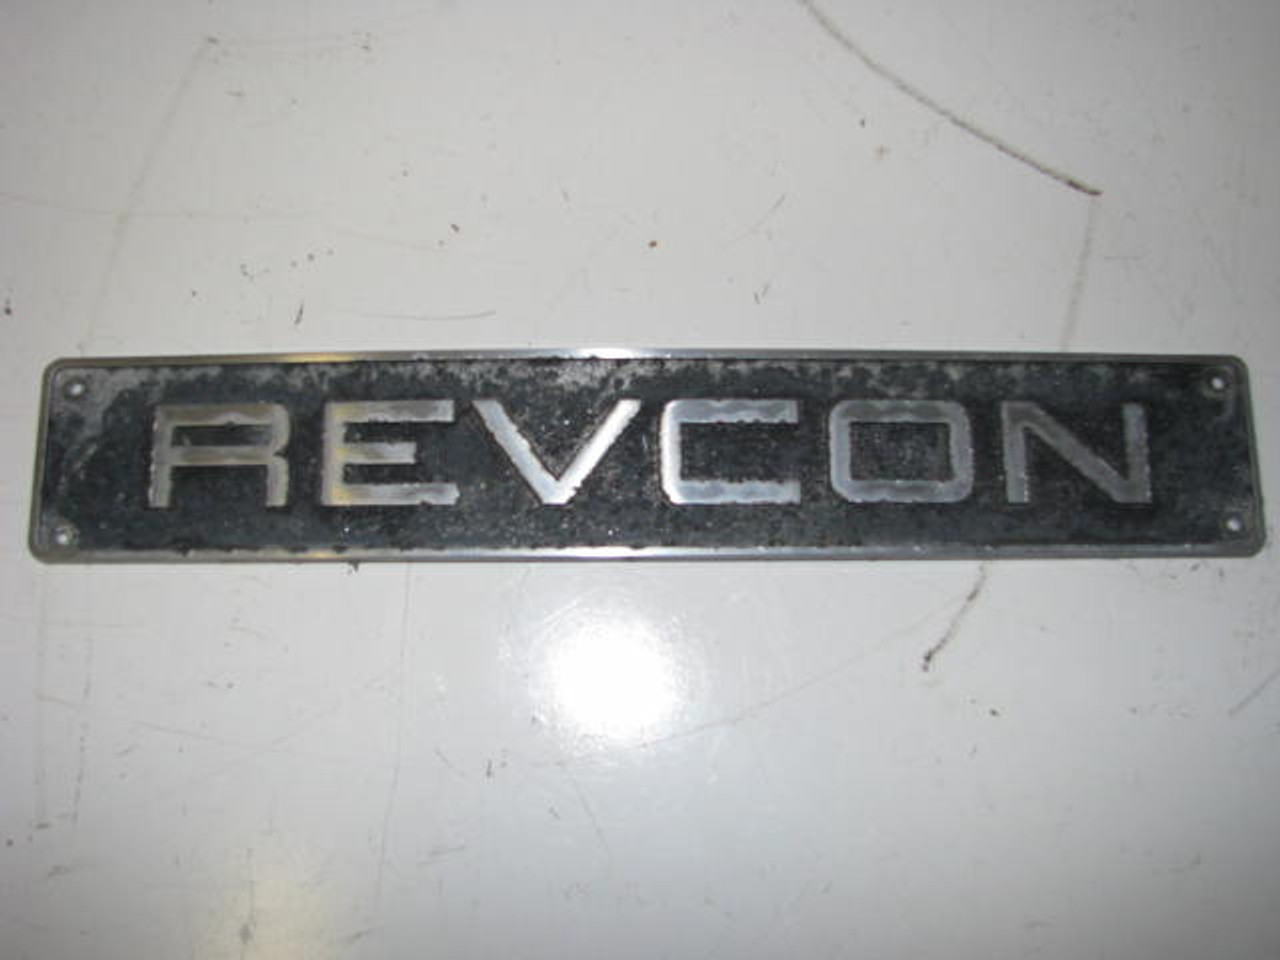 Revcon Name Plate (HW097)